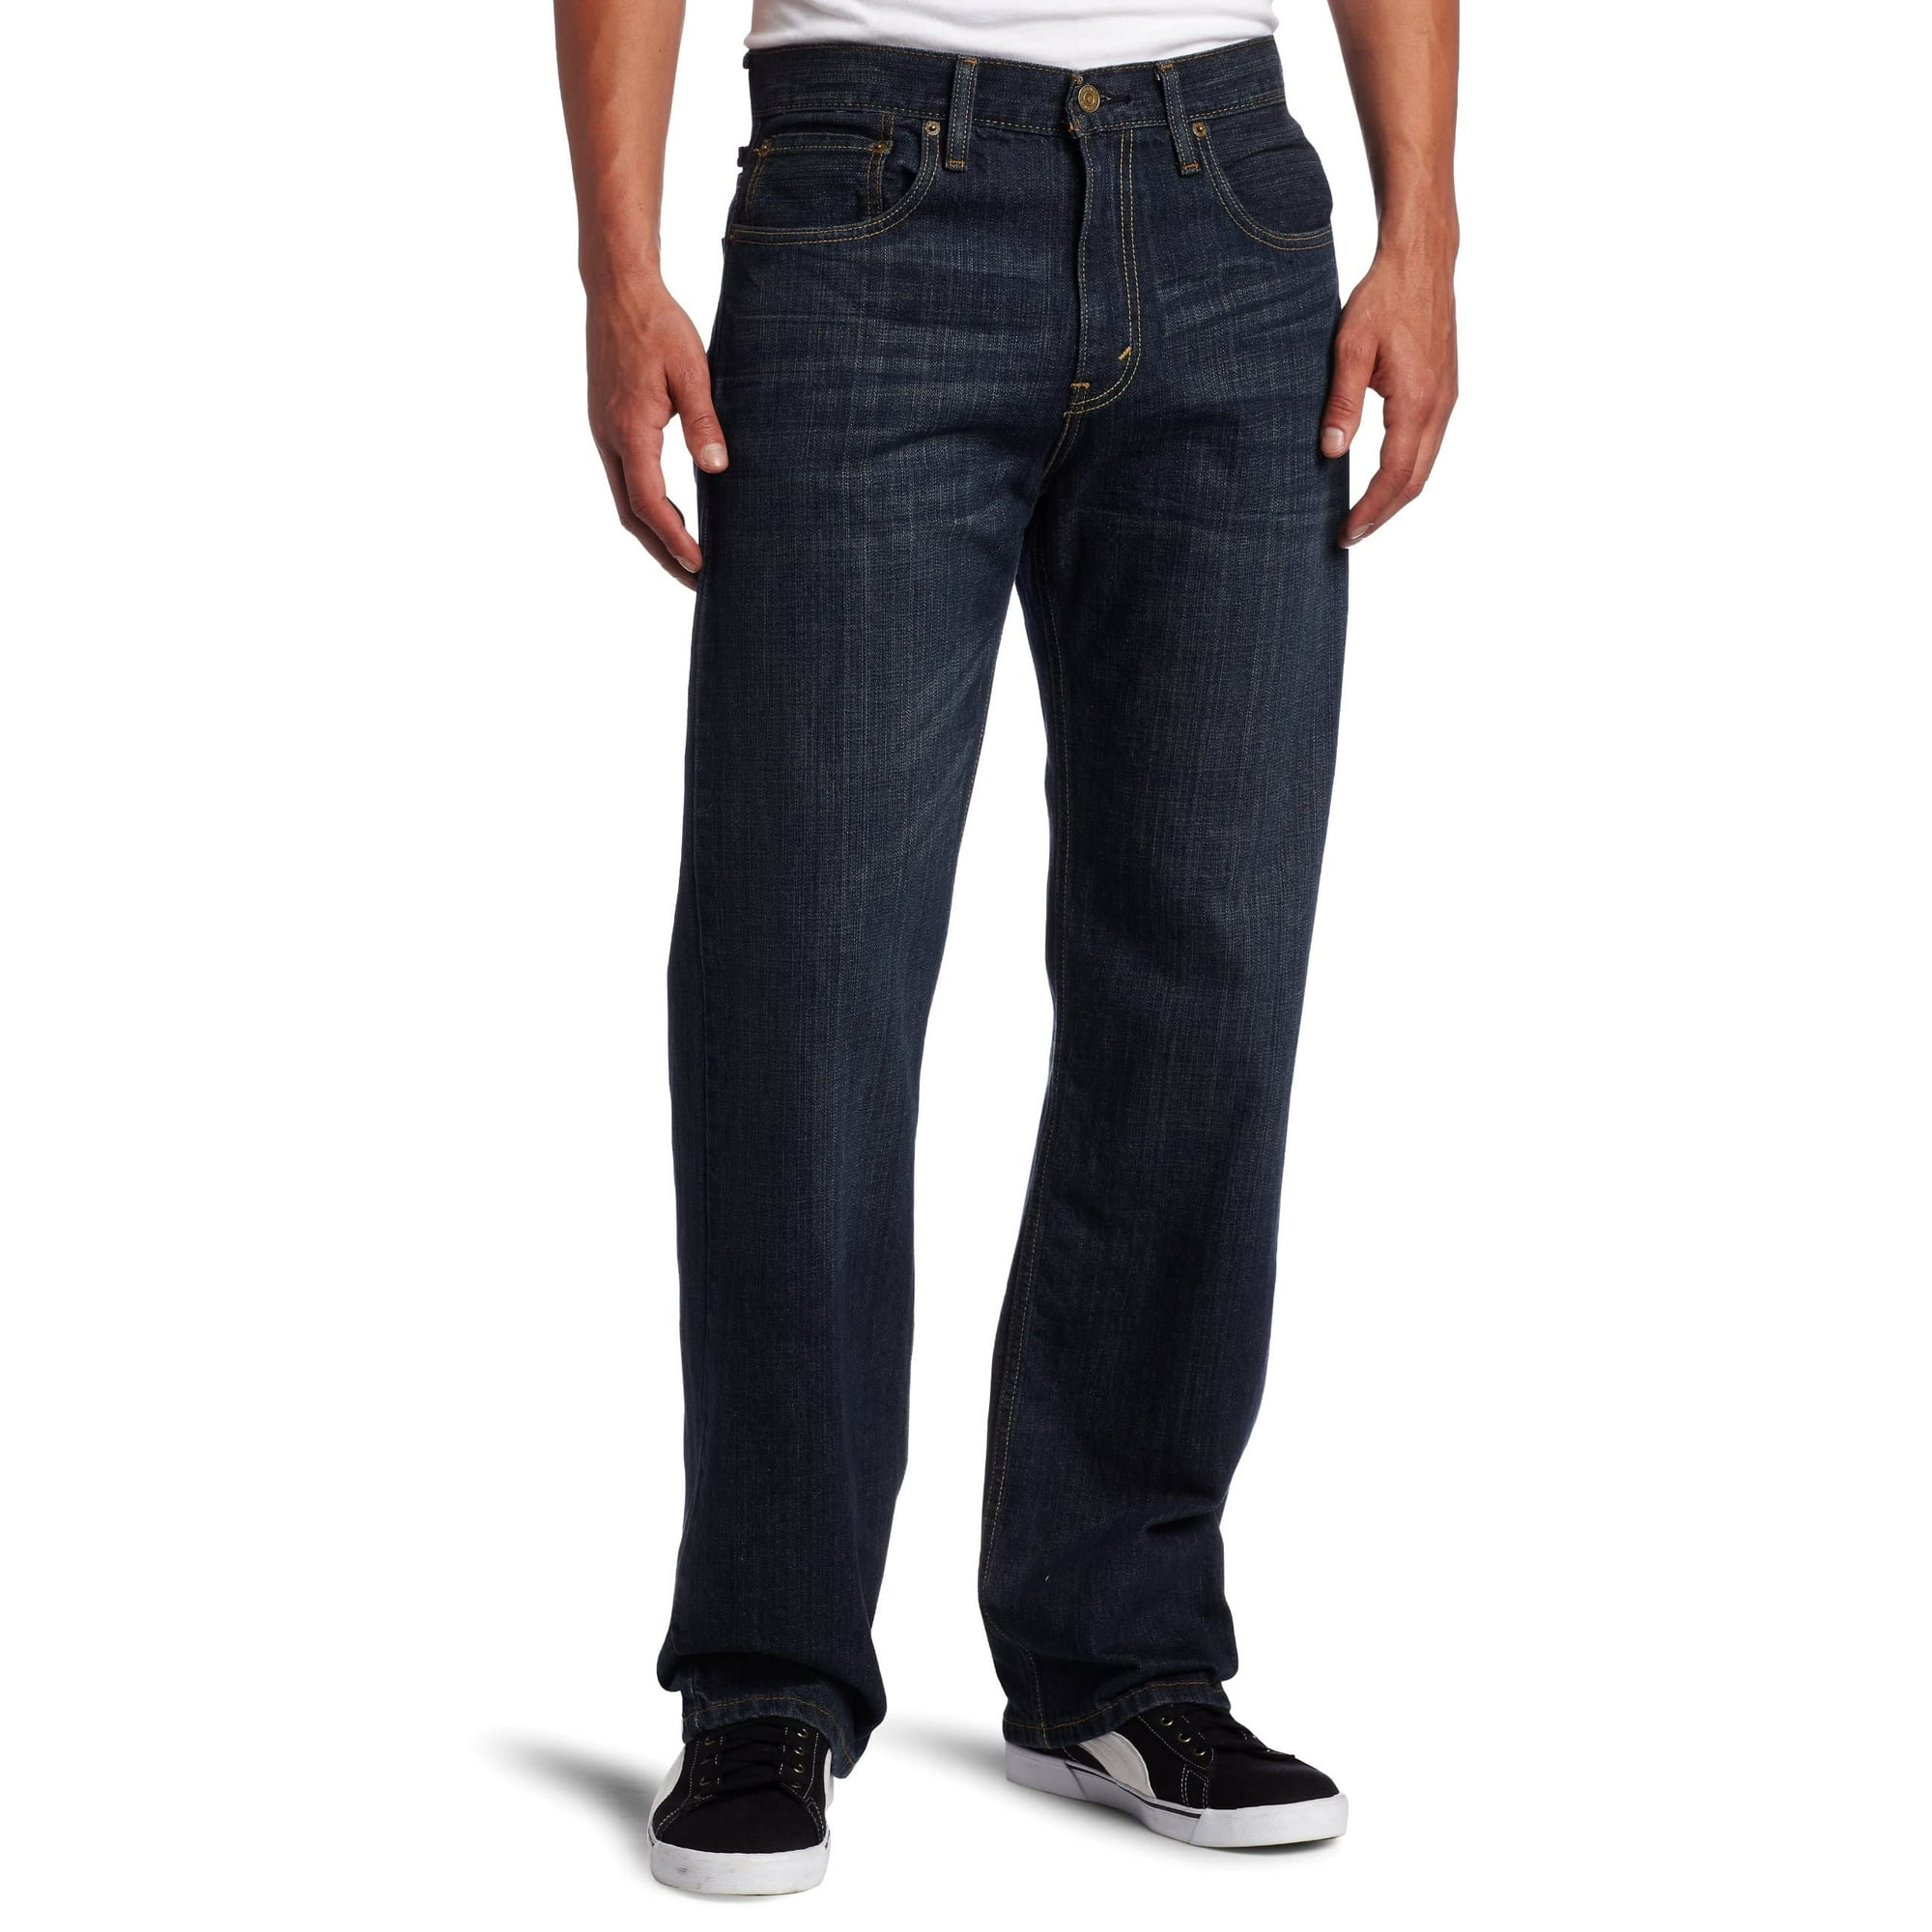 Levi's Men's 569 Loose Straight Jean, Dark Chipped, 34x34 | Walmart Canada